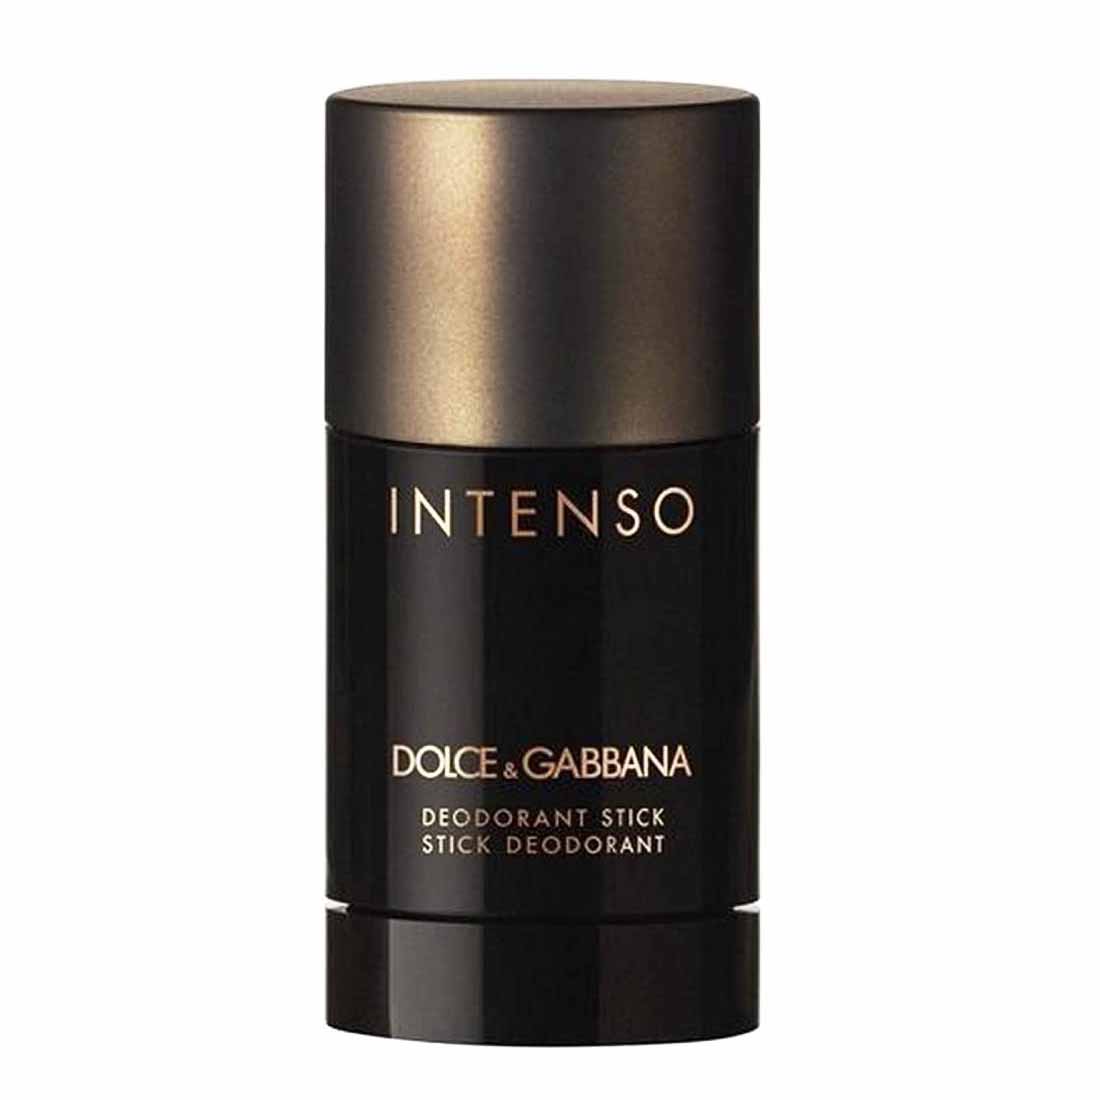 Dolce & Gabbana Intenso Deodorant Stick 75ml